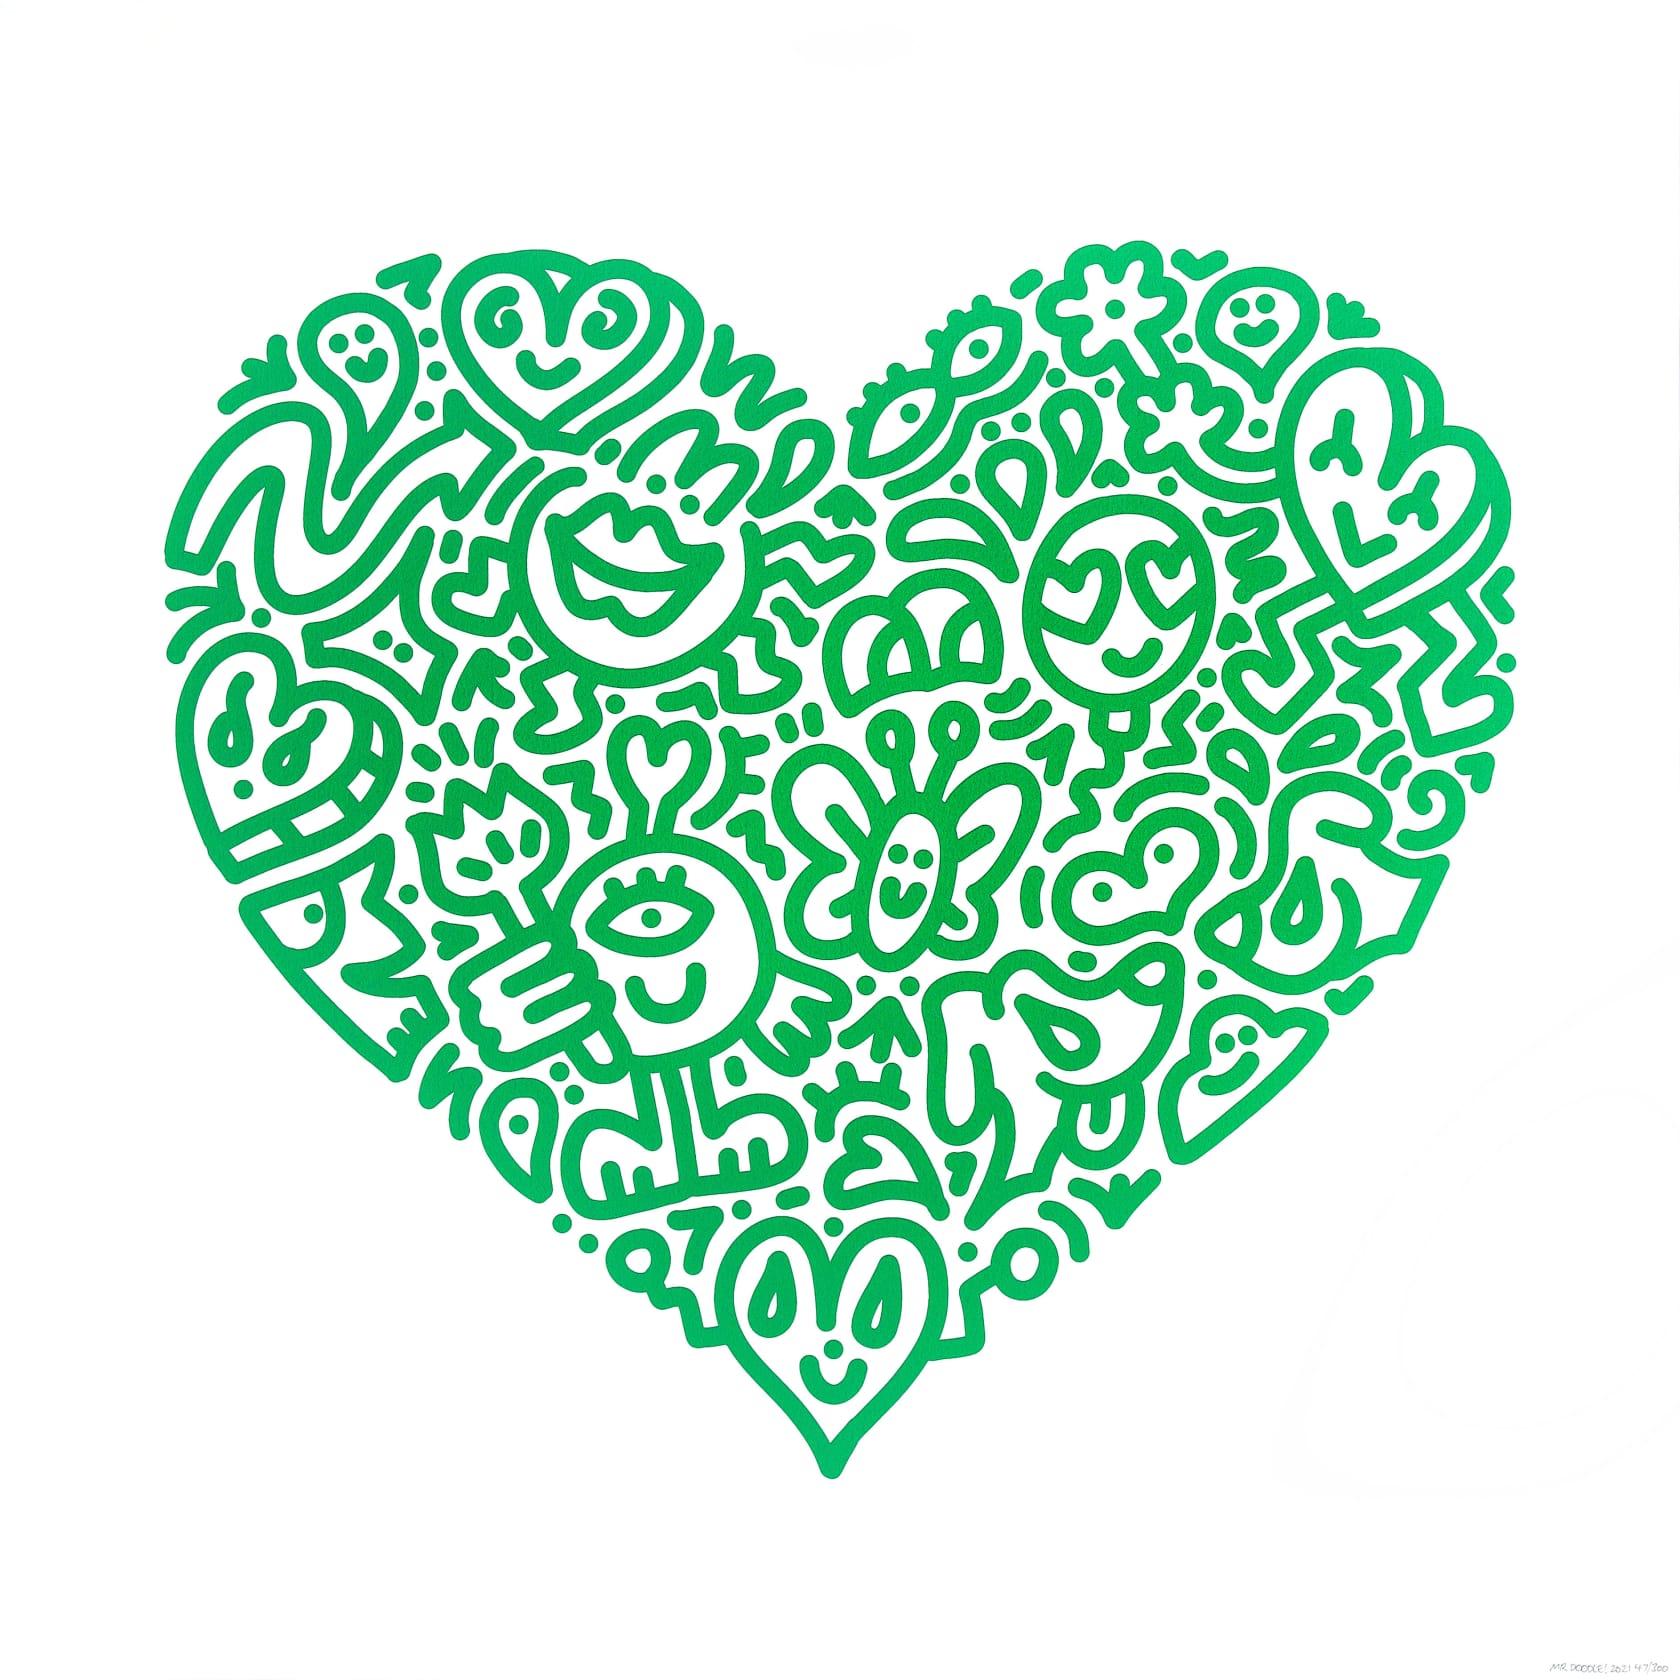 Mr. Doodle, Pop Heart (Green), 2021